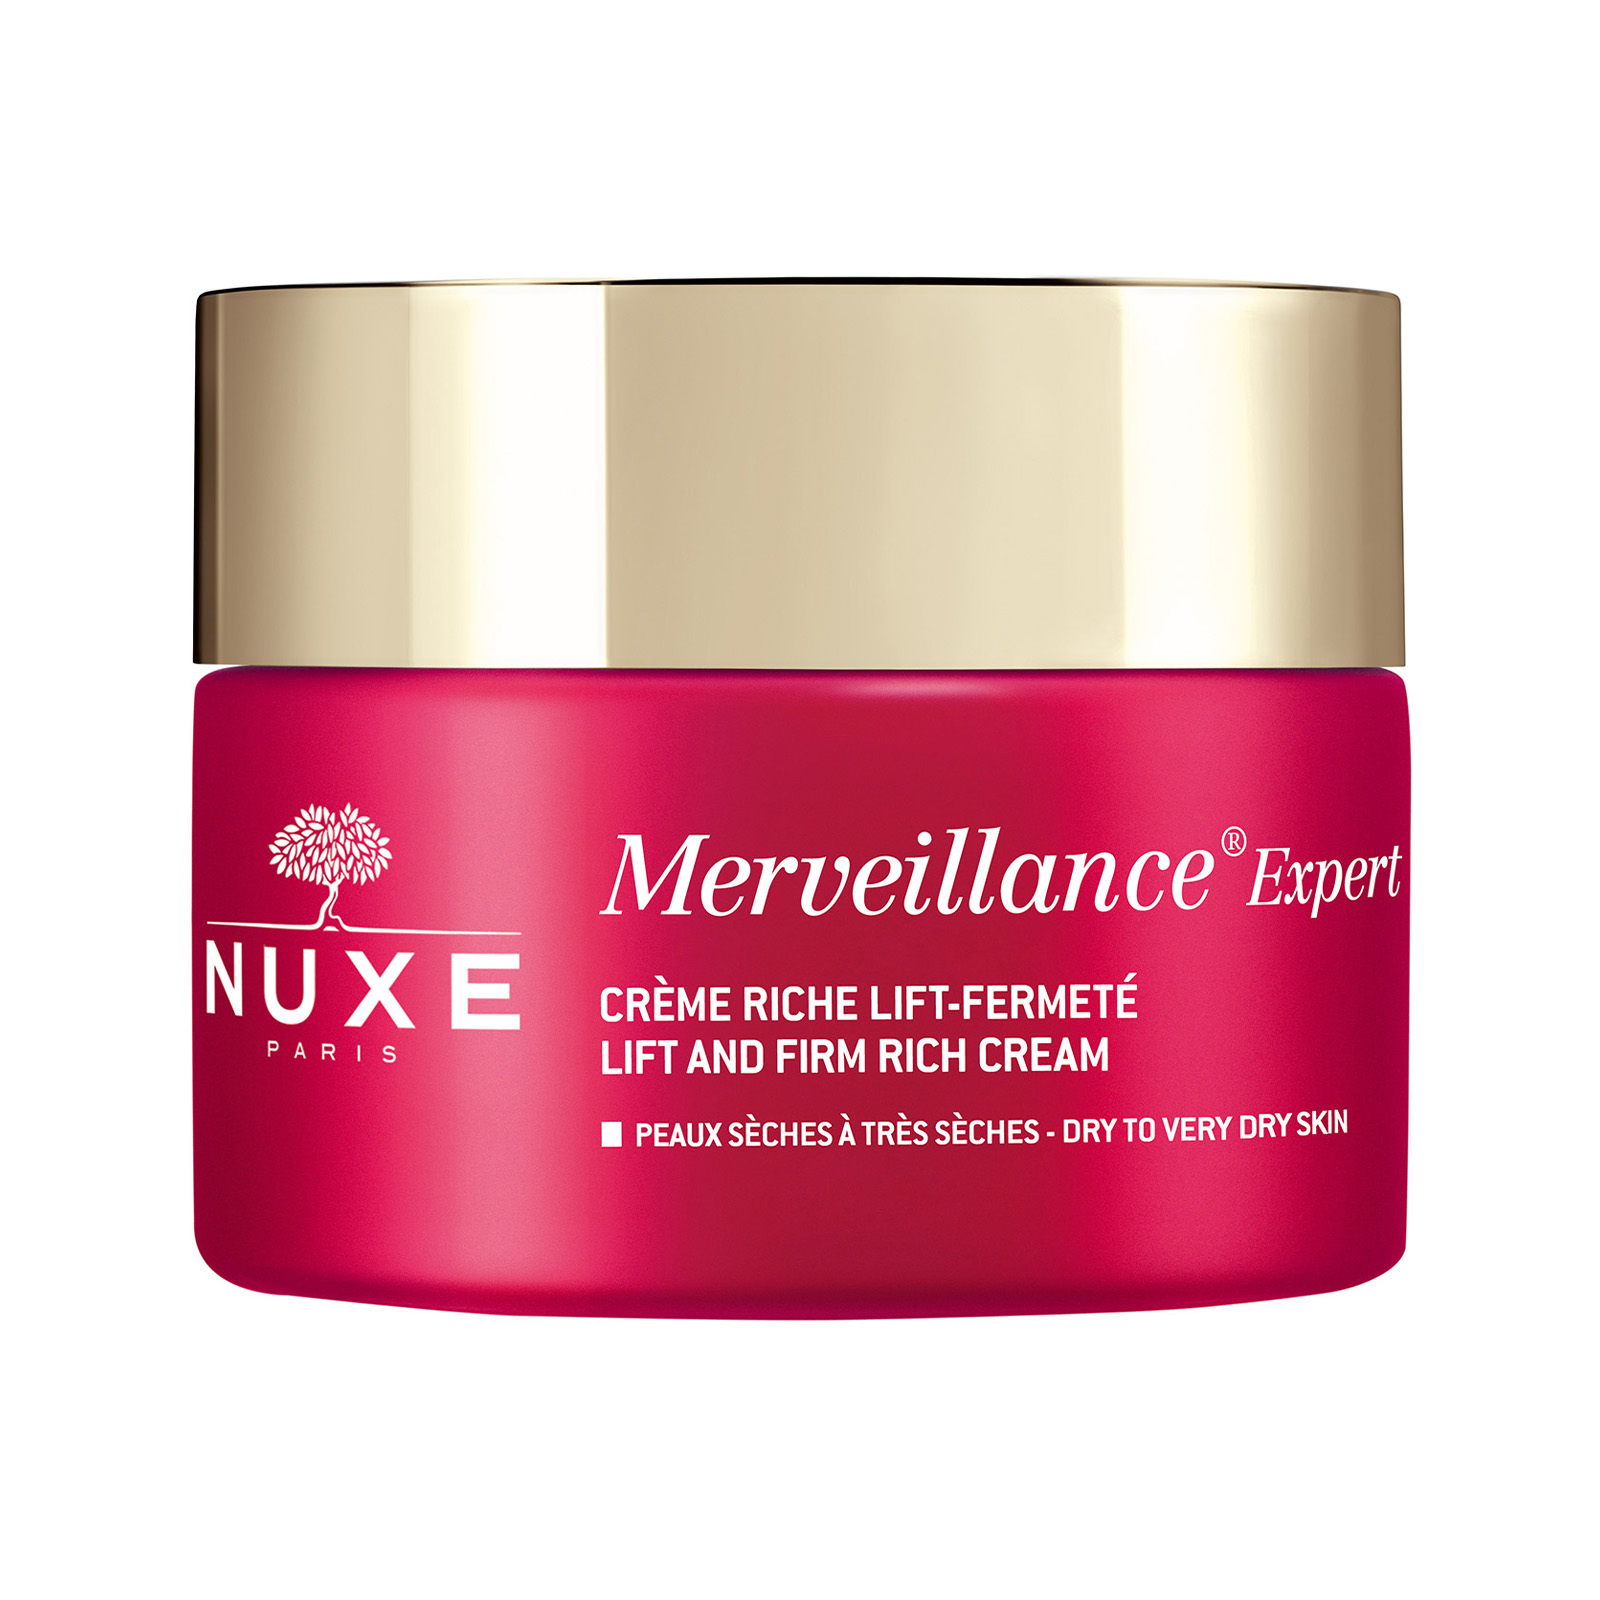 Nuxe Merveillance Expert Anti Wrinkle Cream 50ml Dry to Very Dry Skin in Dubai, UAE